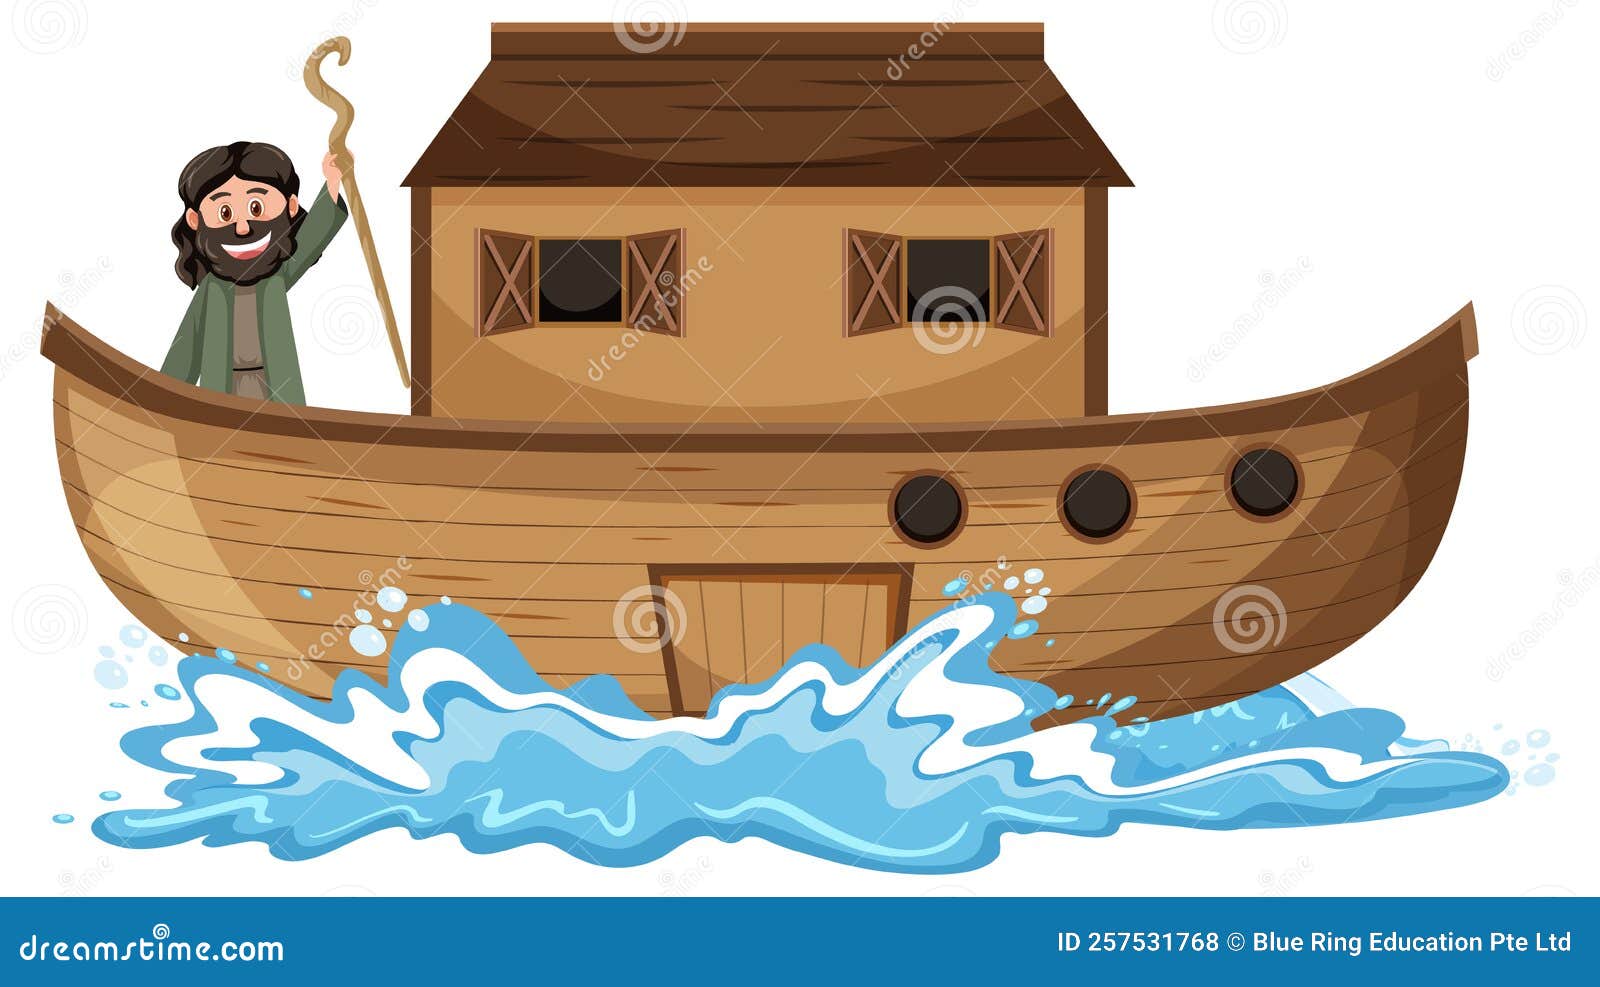 Noahs Ark and Cartoon Character Set Stock Vector - Illustration of ...